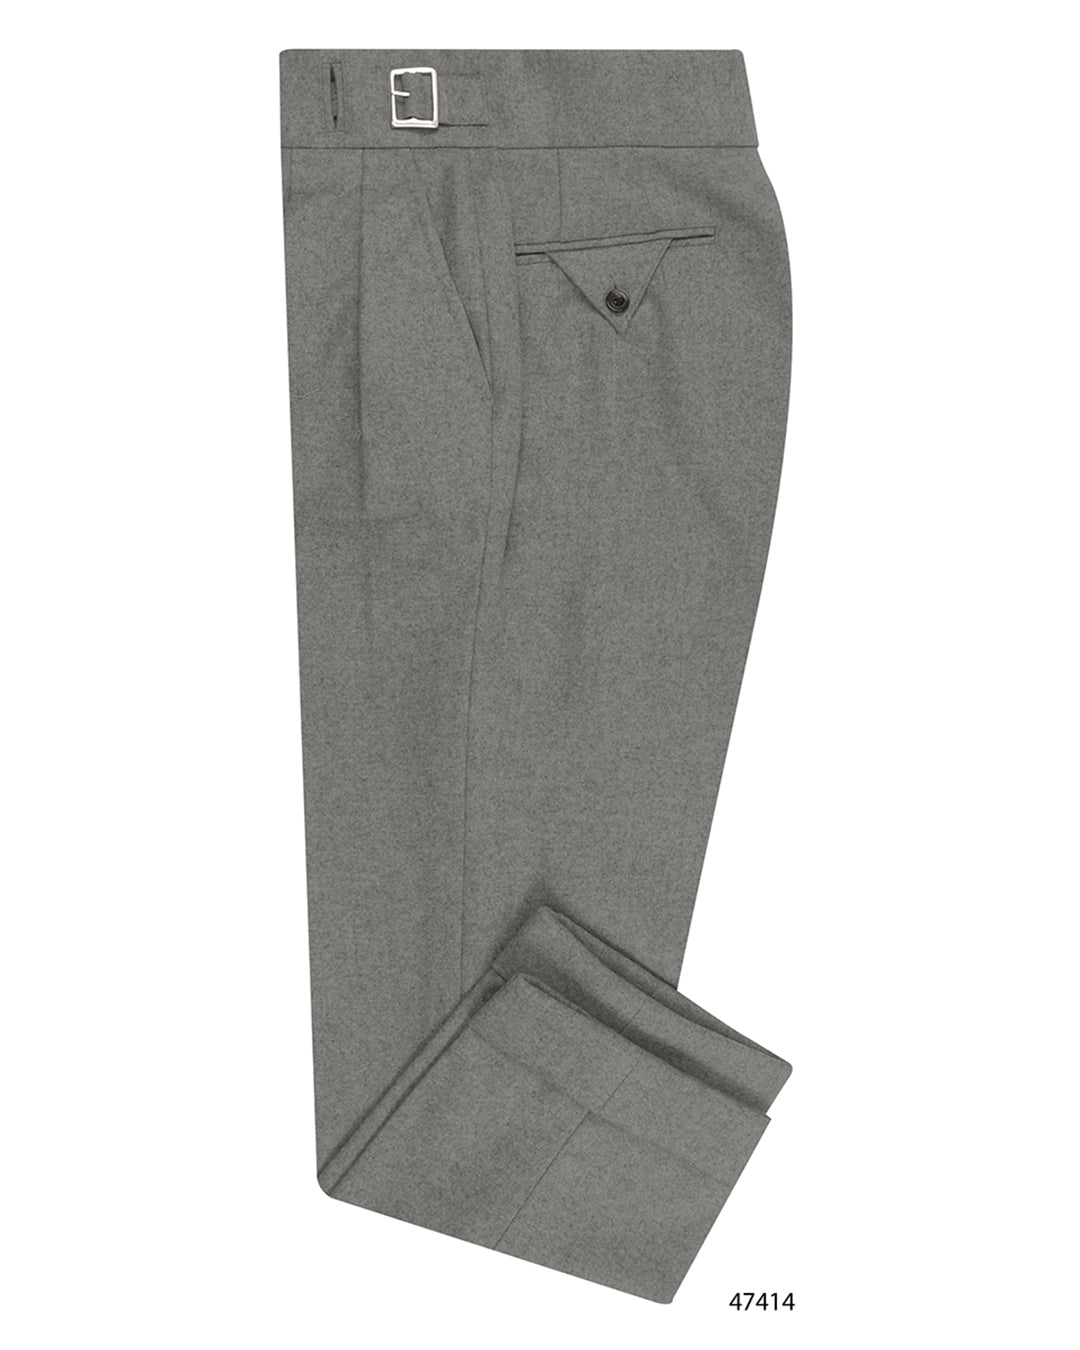 Gurkha Pant in EThomas Wool Cashmere: Light Grey Wool